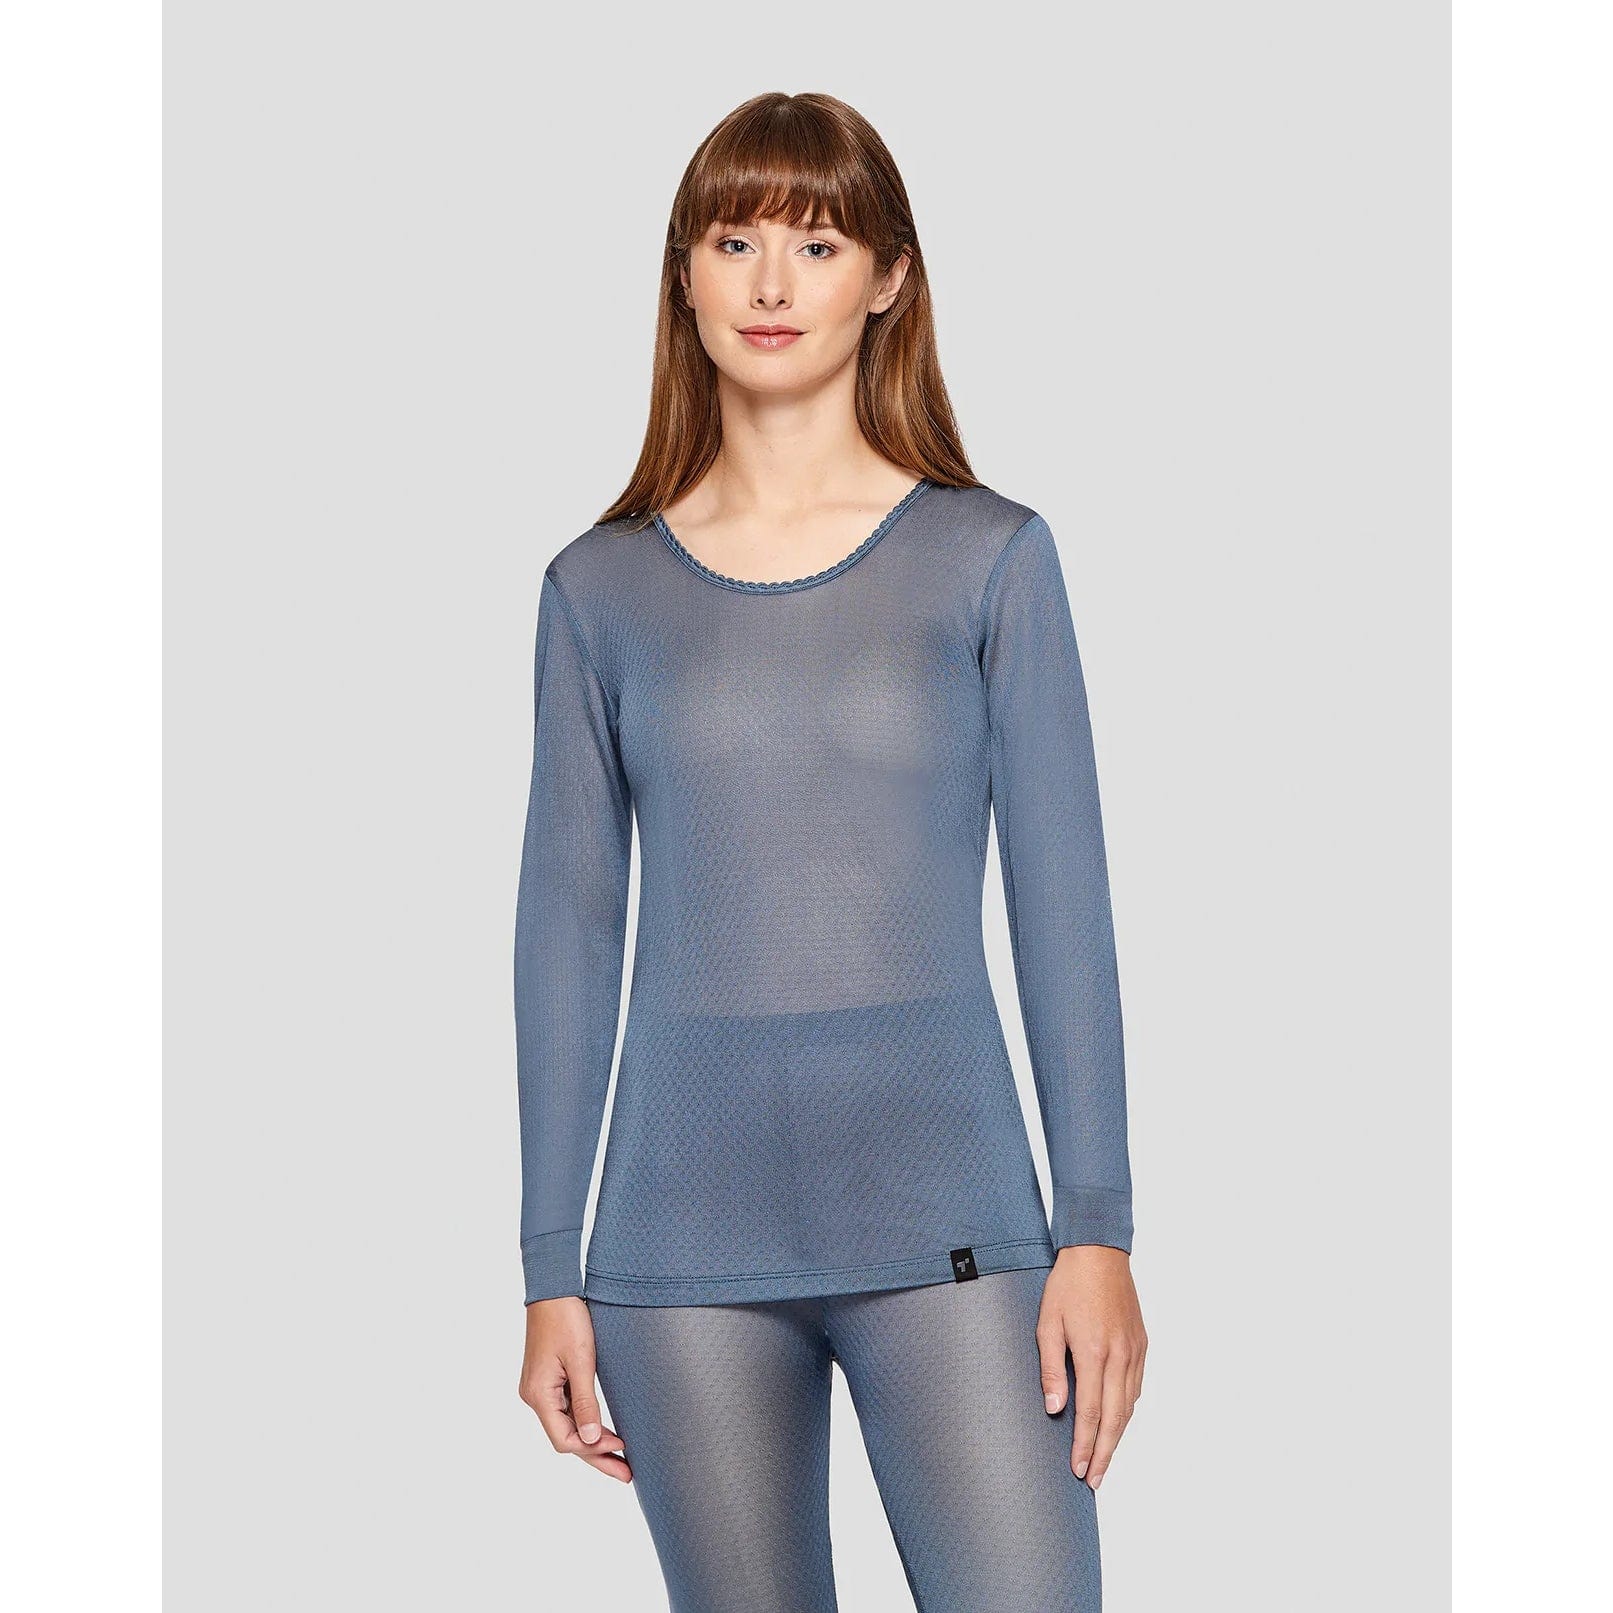 Silk Base Layer TERRAMAR THERMASILK Women's TOP Shirt 100% SILK Blue Large  L